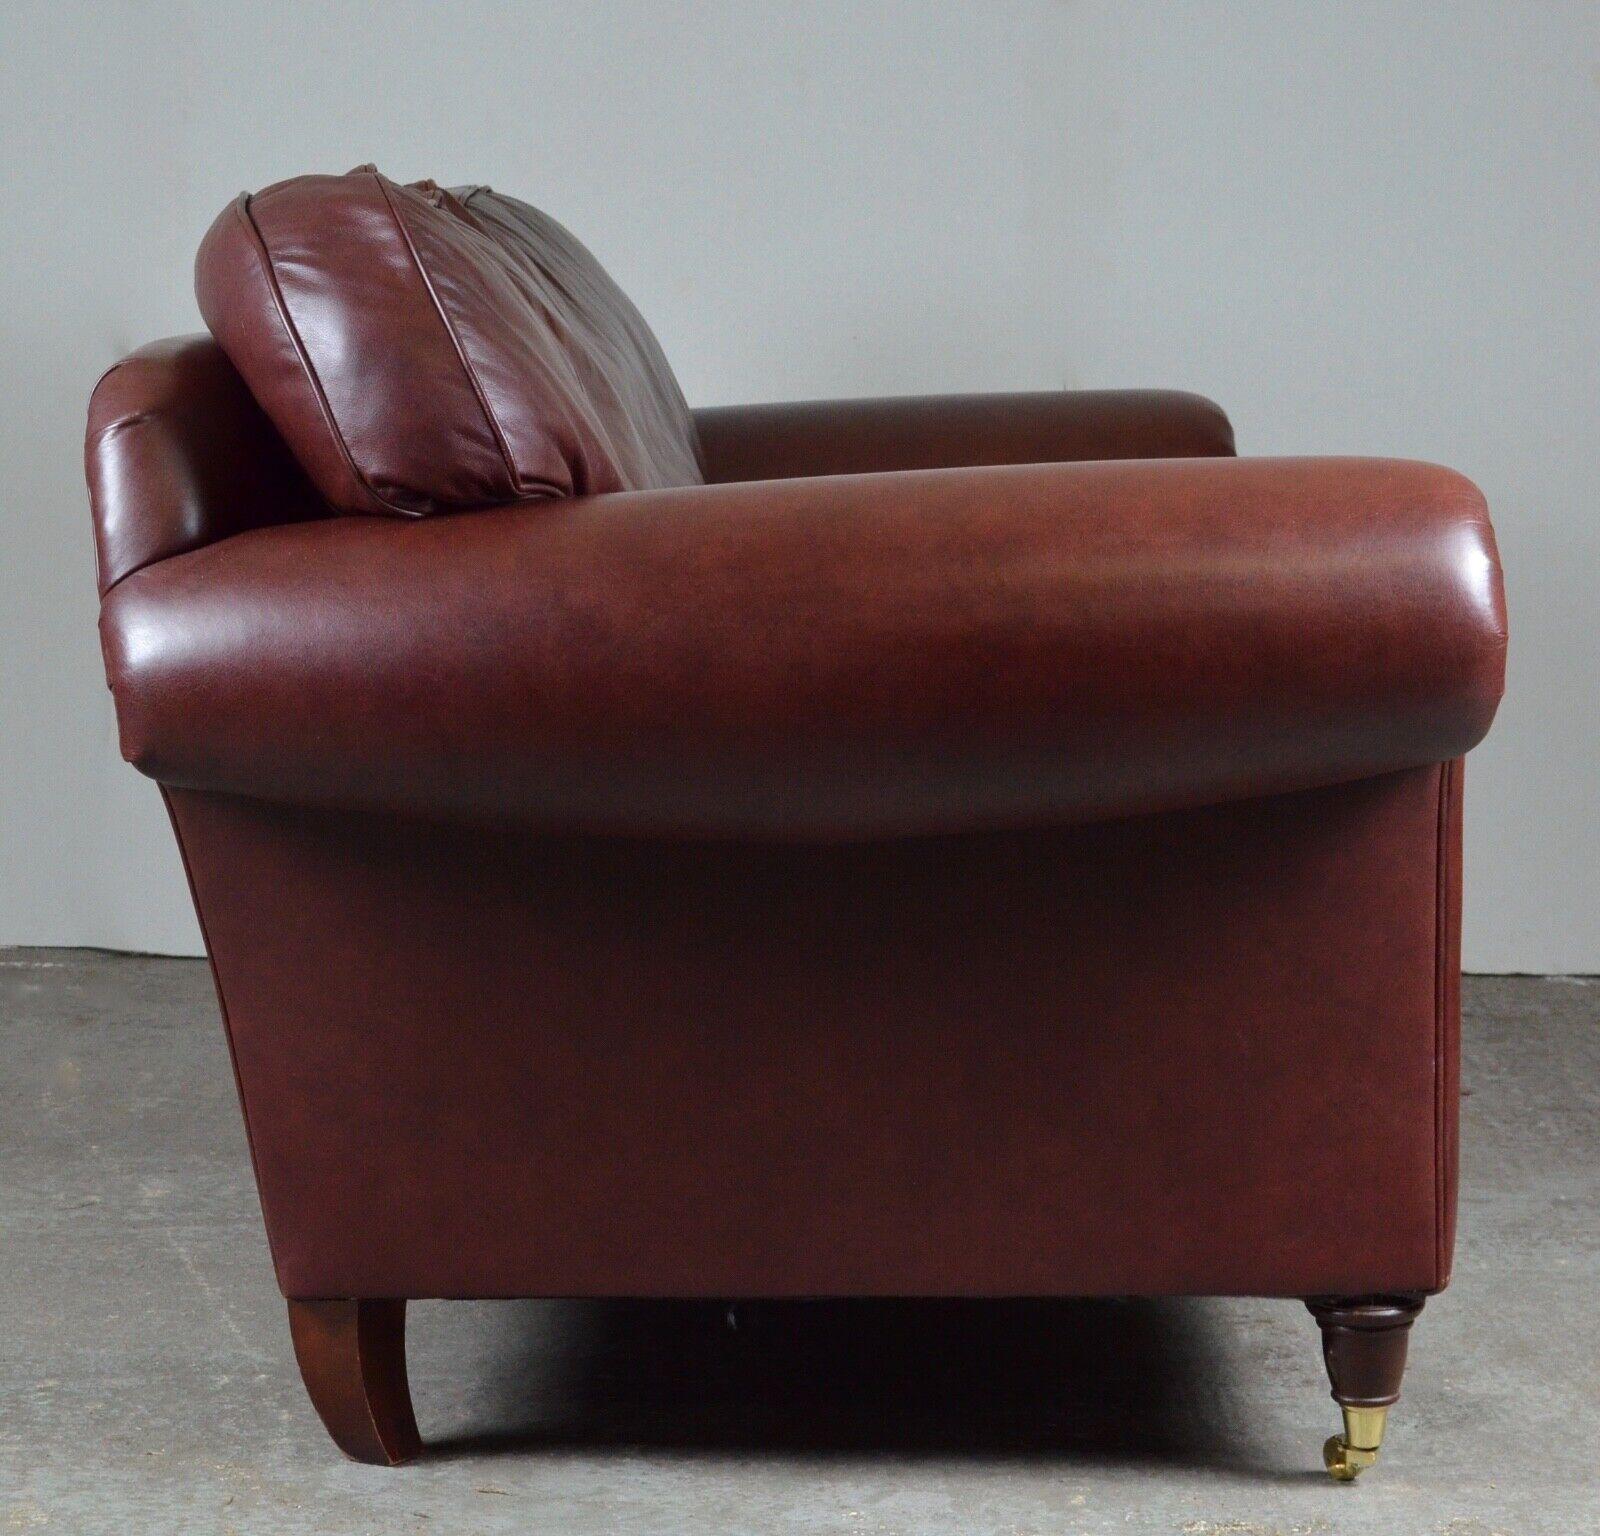 laura ashley brown leather sofa